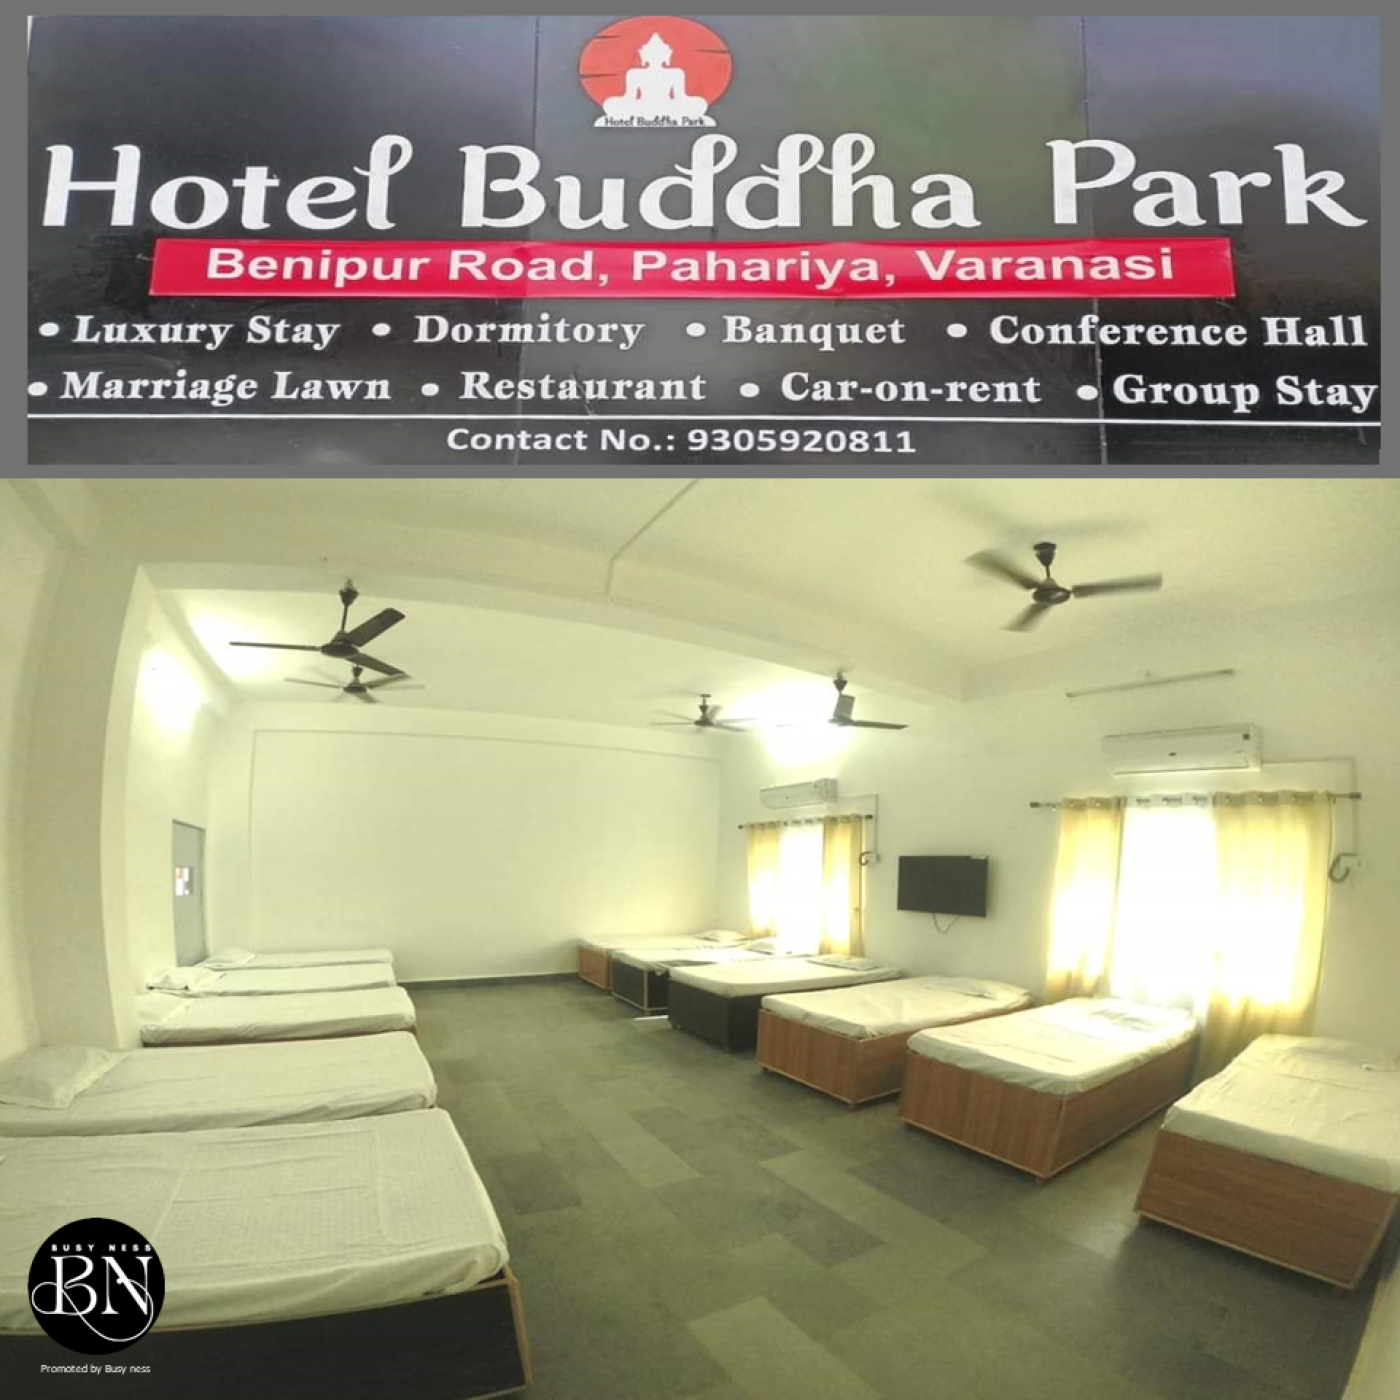 DORMITORY ROOMS AT HOTEL BUDDHA PARK, PAHARIYA, VARANASI